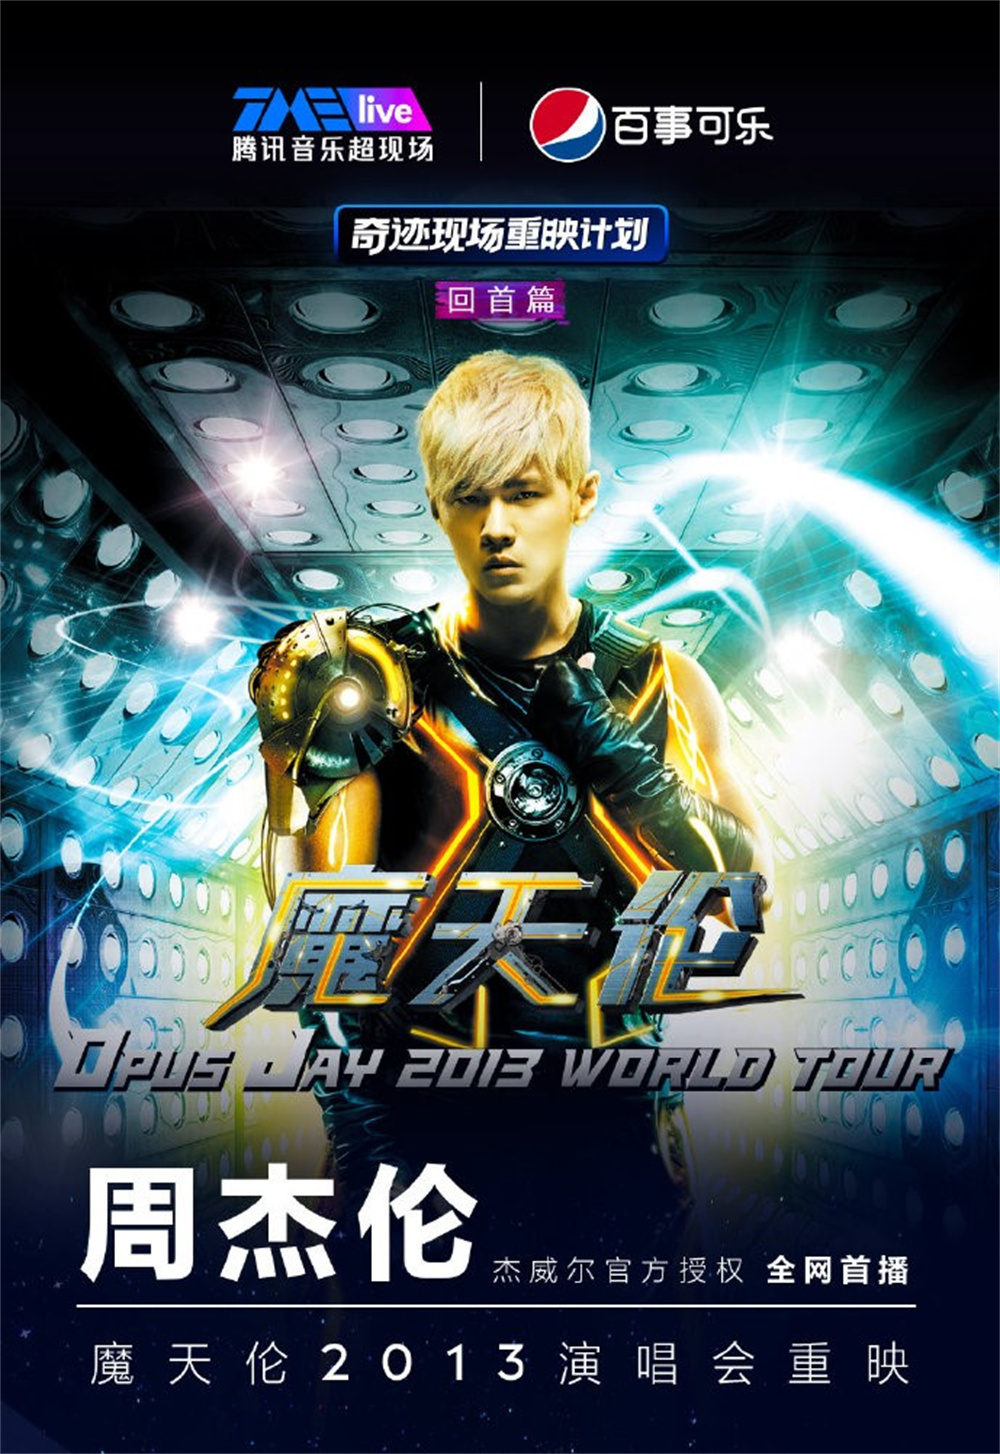 Jay Chou Mo Tianlun's 2013 concert re-screening poster